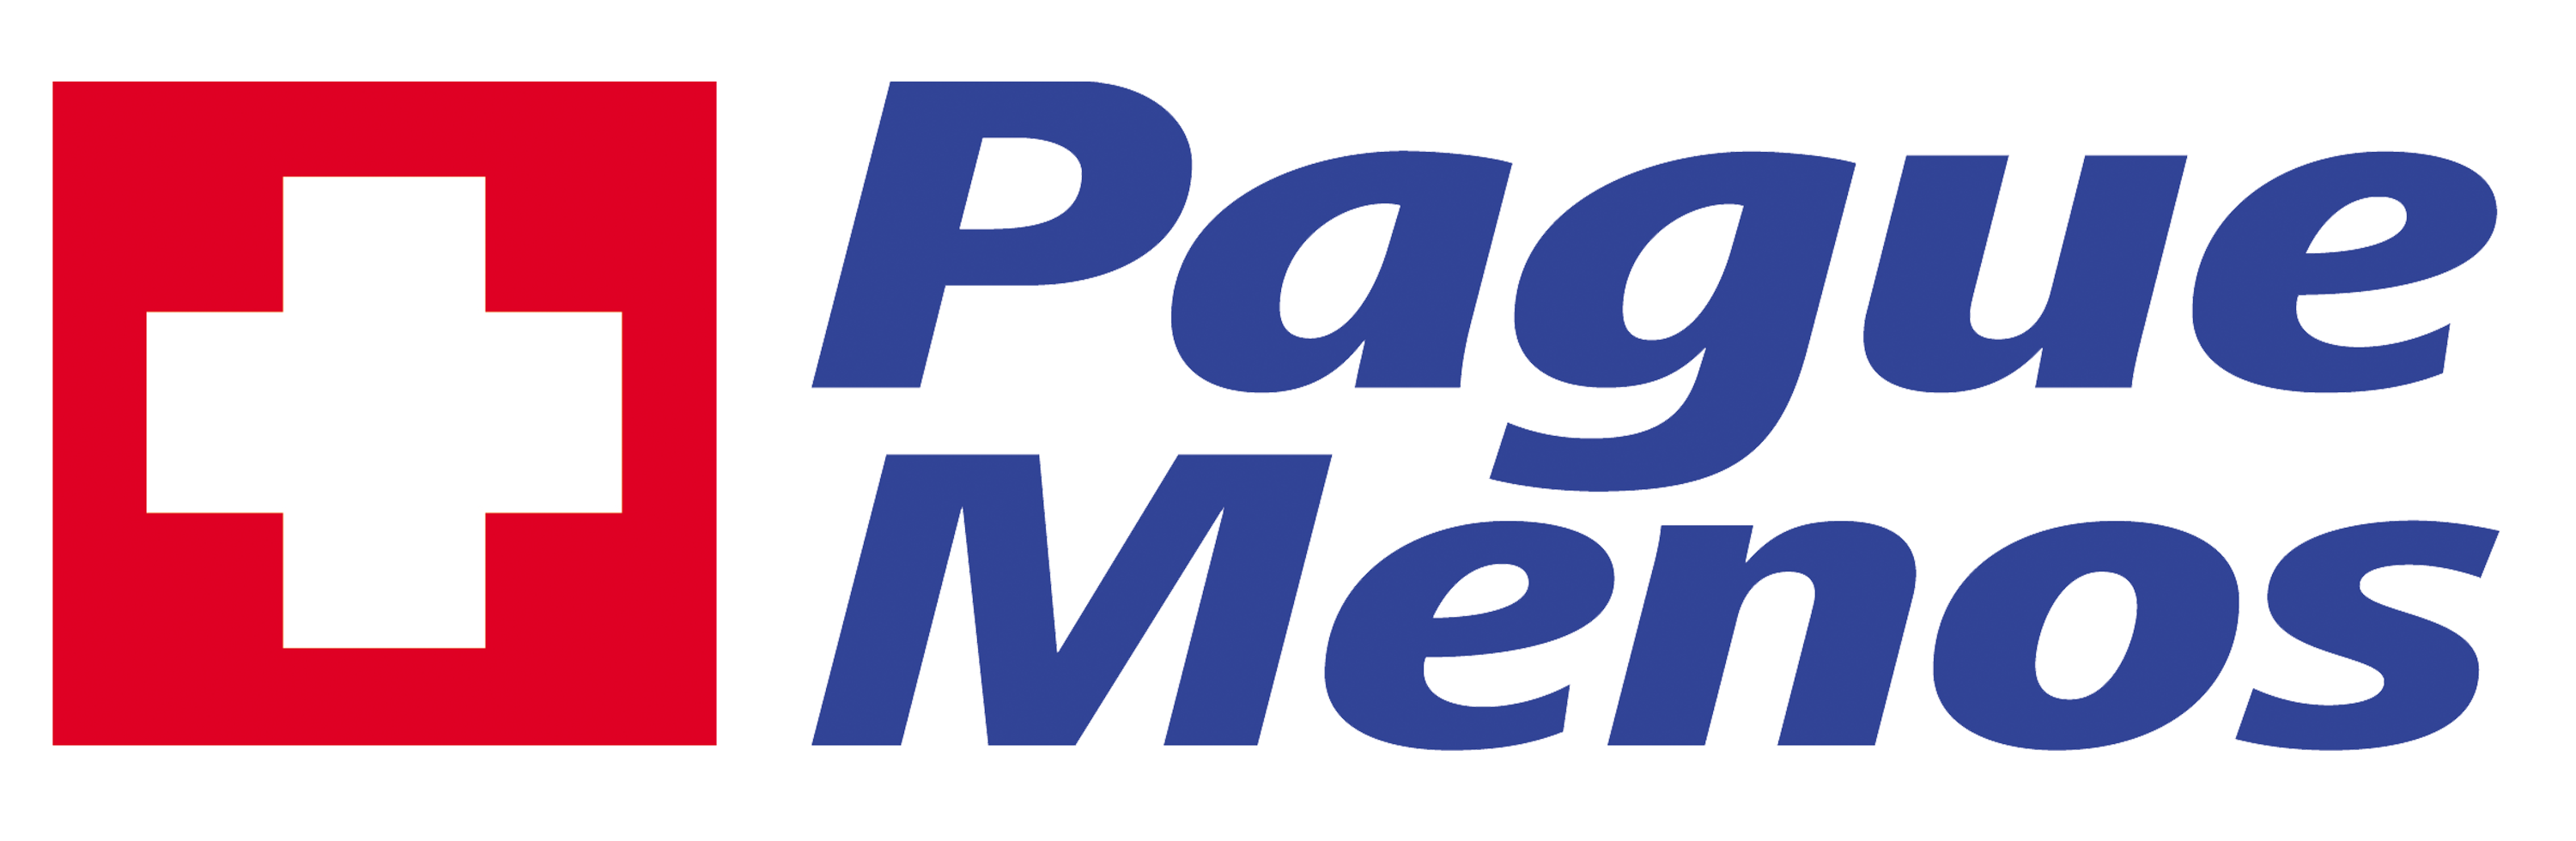 Farmacia Pague Menos - Rodovia 316 - MA